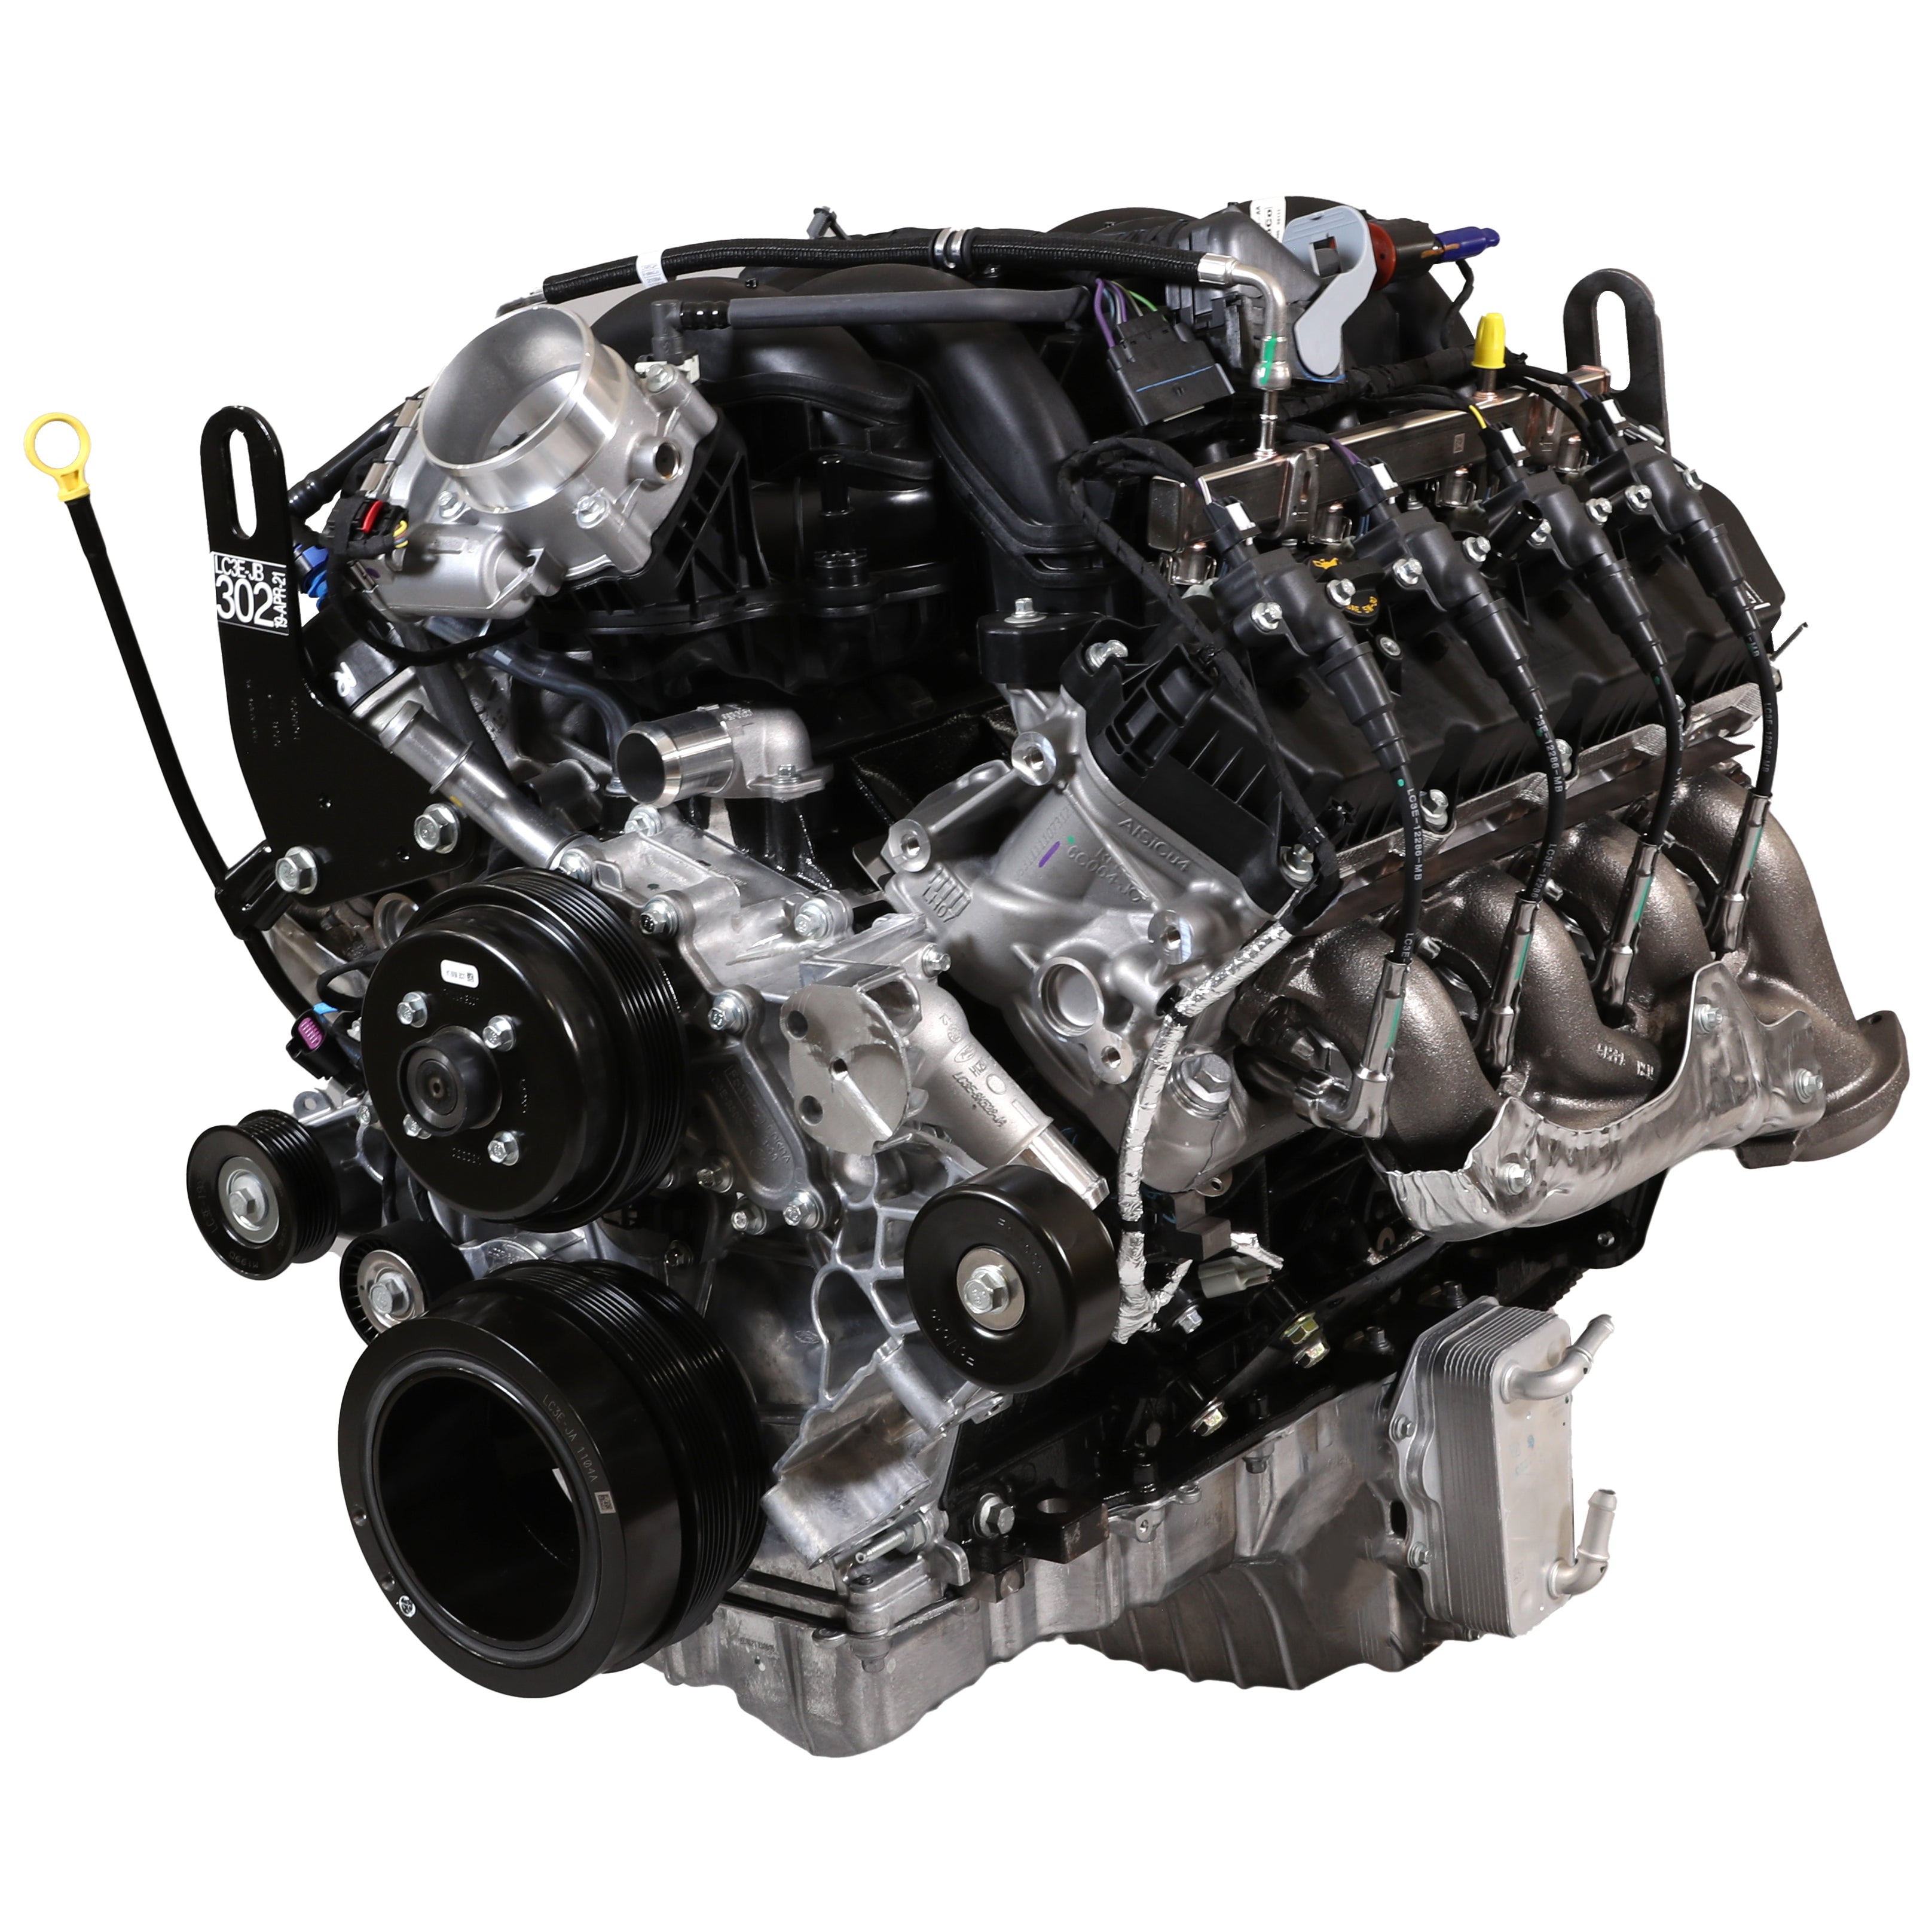 Motore Ford Performance 7.3L V8 430HP Super Duty "Godzilla".